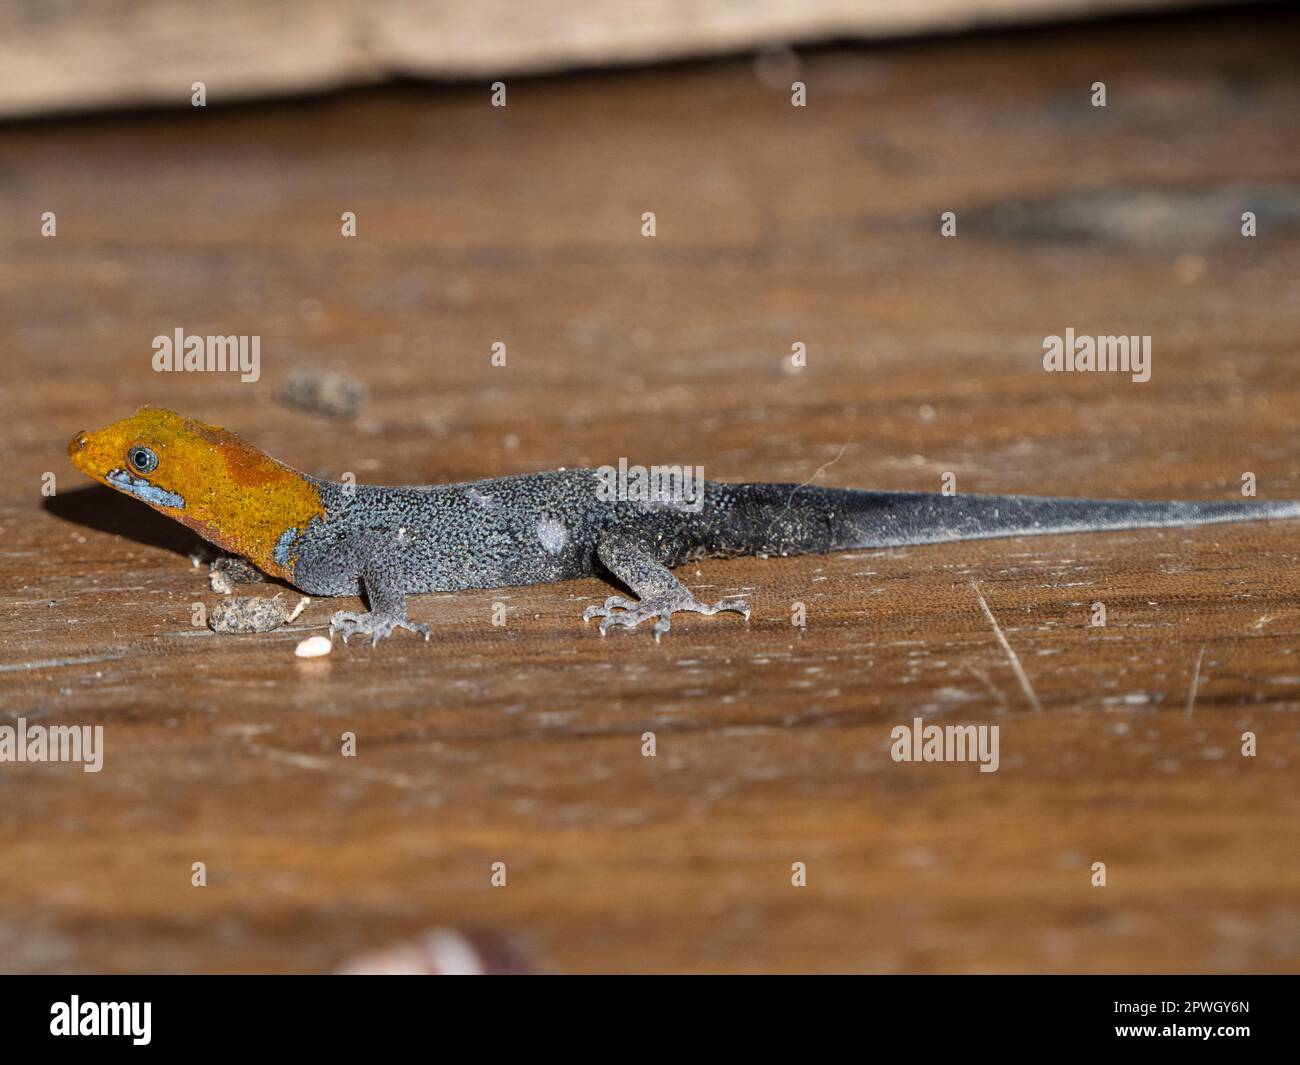 Yellow-headed gecko (Gonatodes albogularis), Cabo Blanco Nature Reserve, Costa Rica Stock Photo